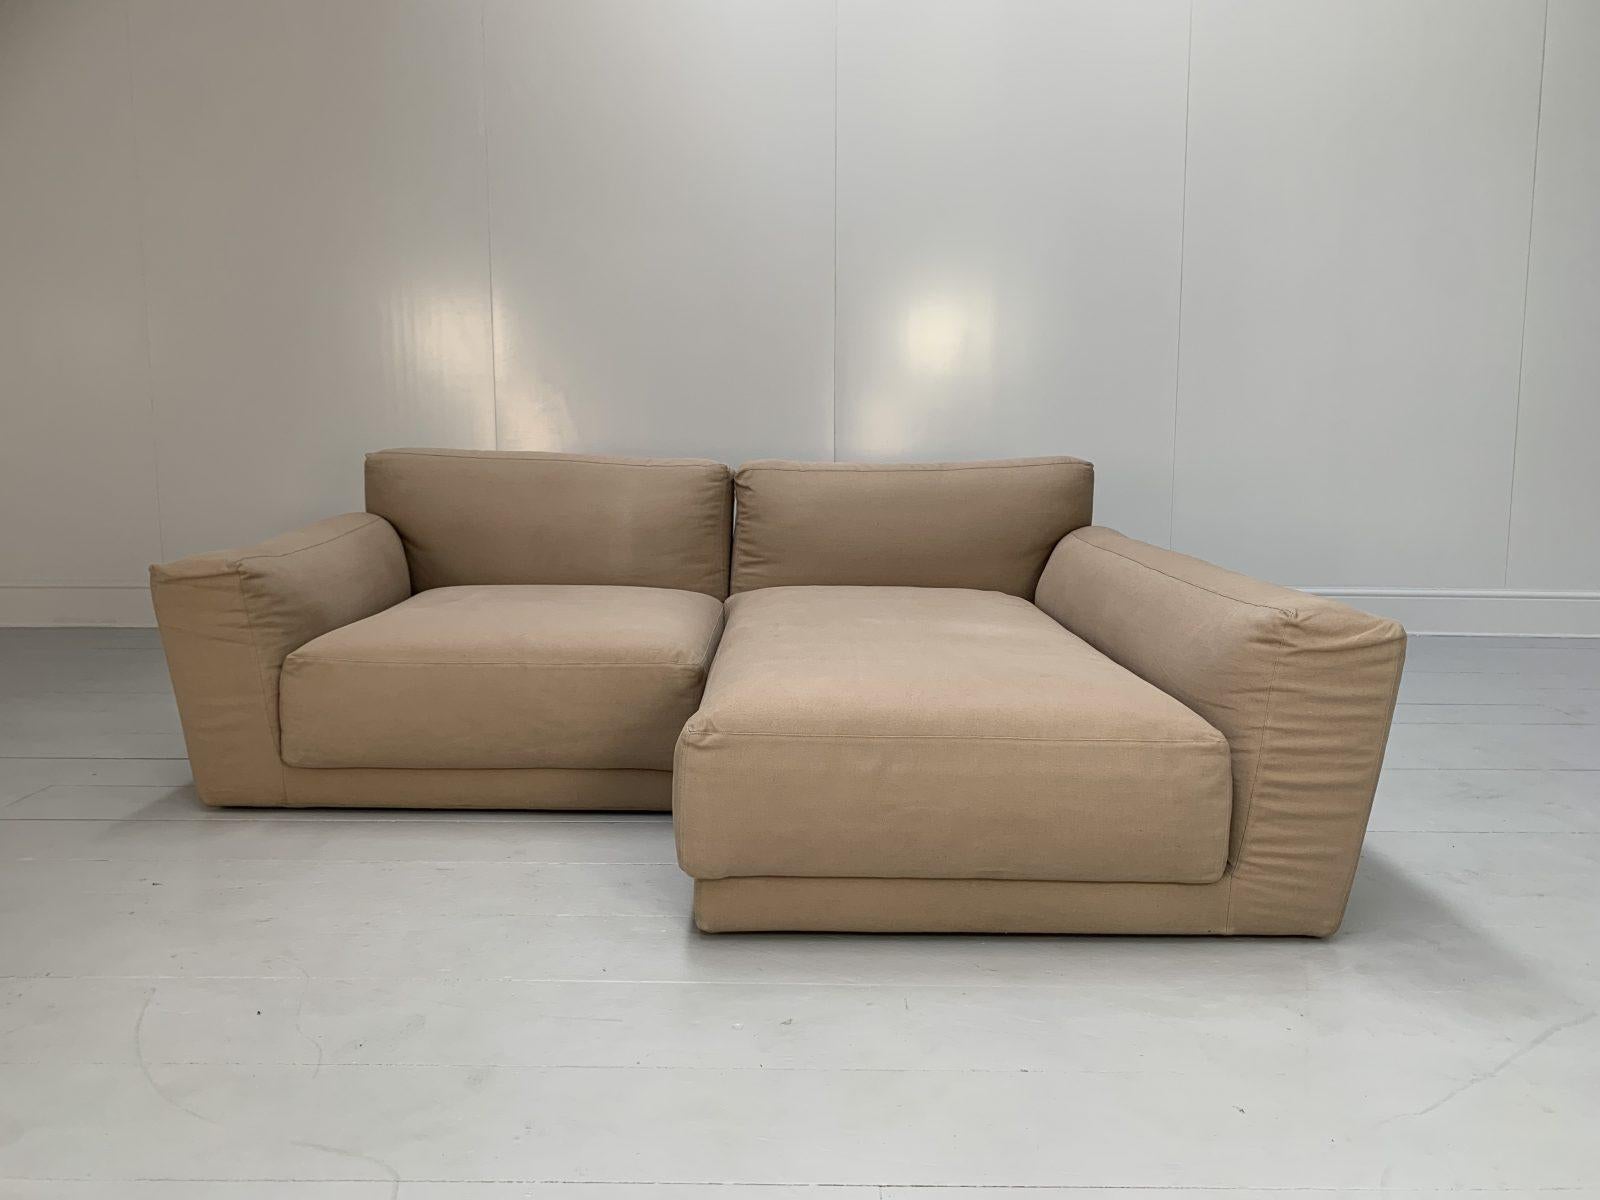 B&B Italia “Luis” 3-Seat Compact L-Shape Sofa – In “Ellade” Linen For Sale 1